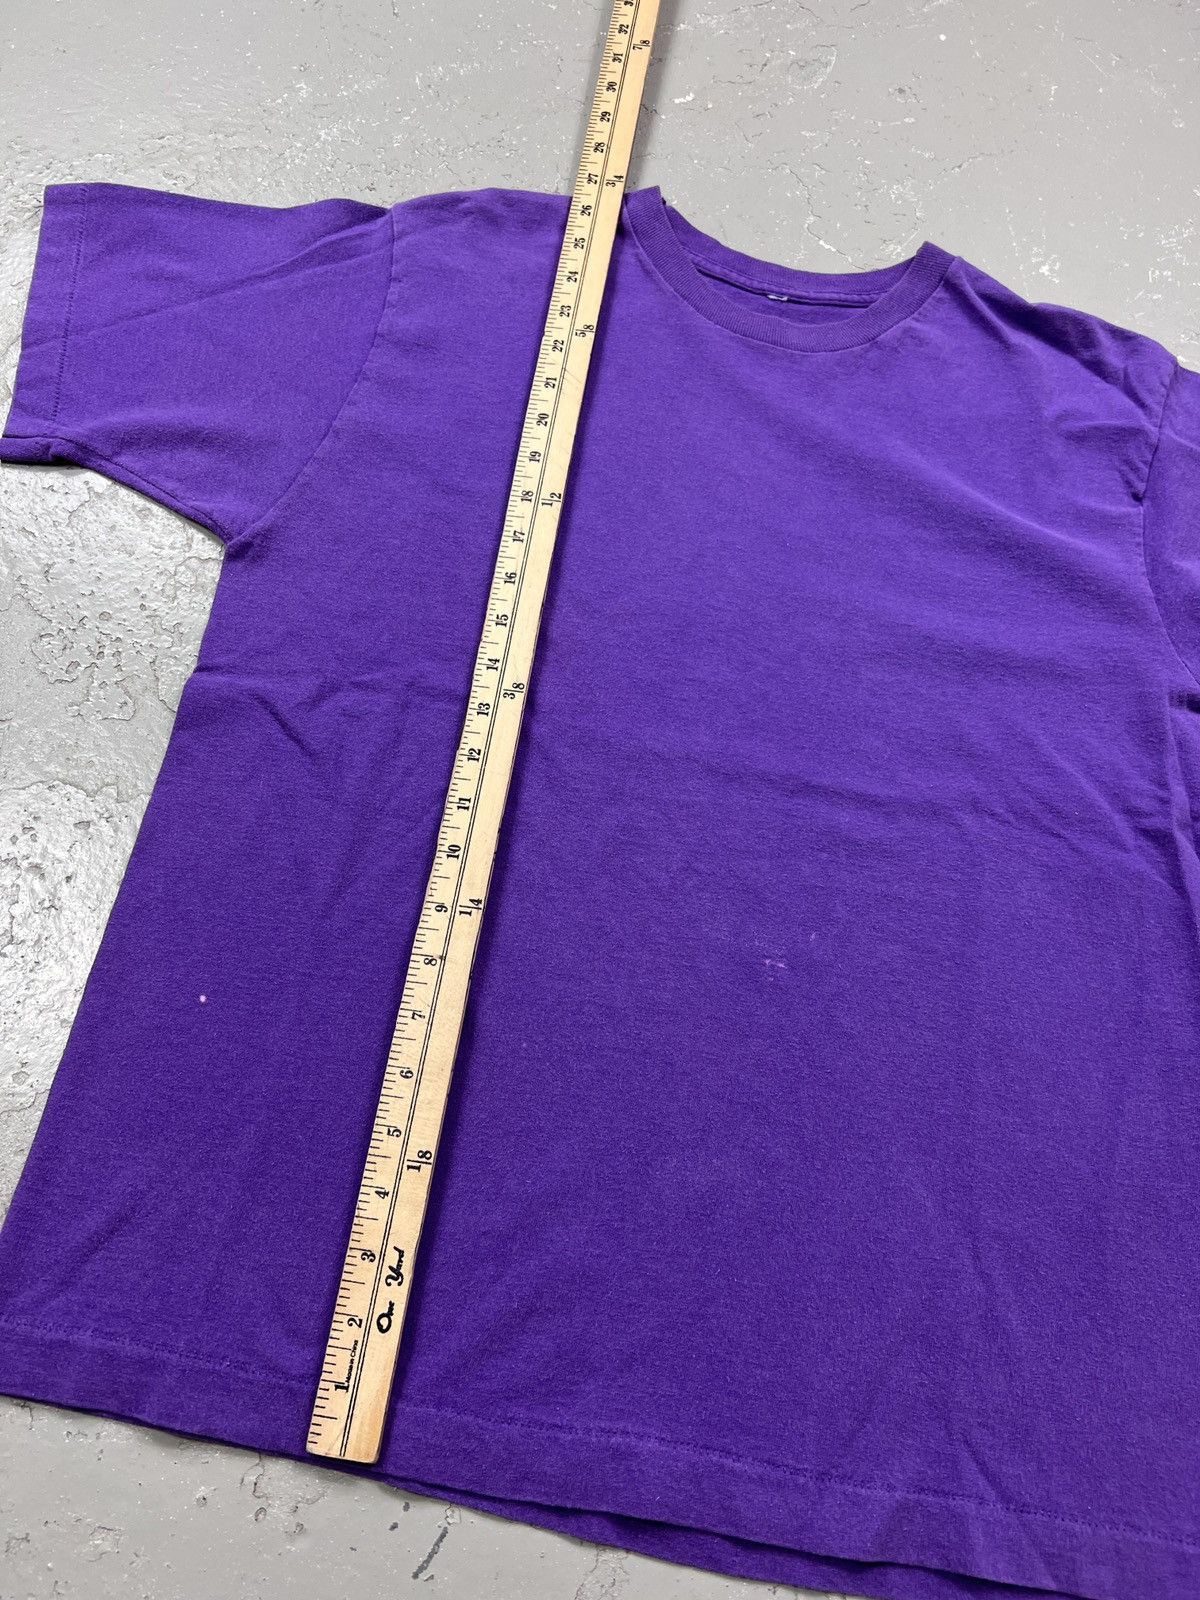 Vintage 90s Single Stitch Purple Blank Size Large Size US L / EU 52-54 / 3 - 6 Thumbnail